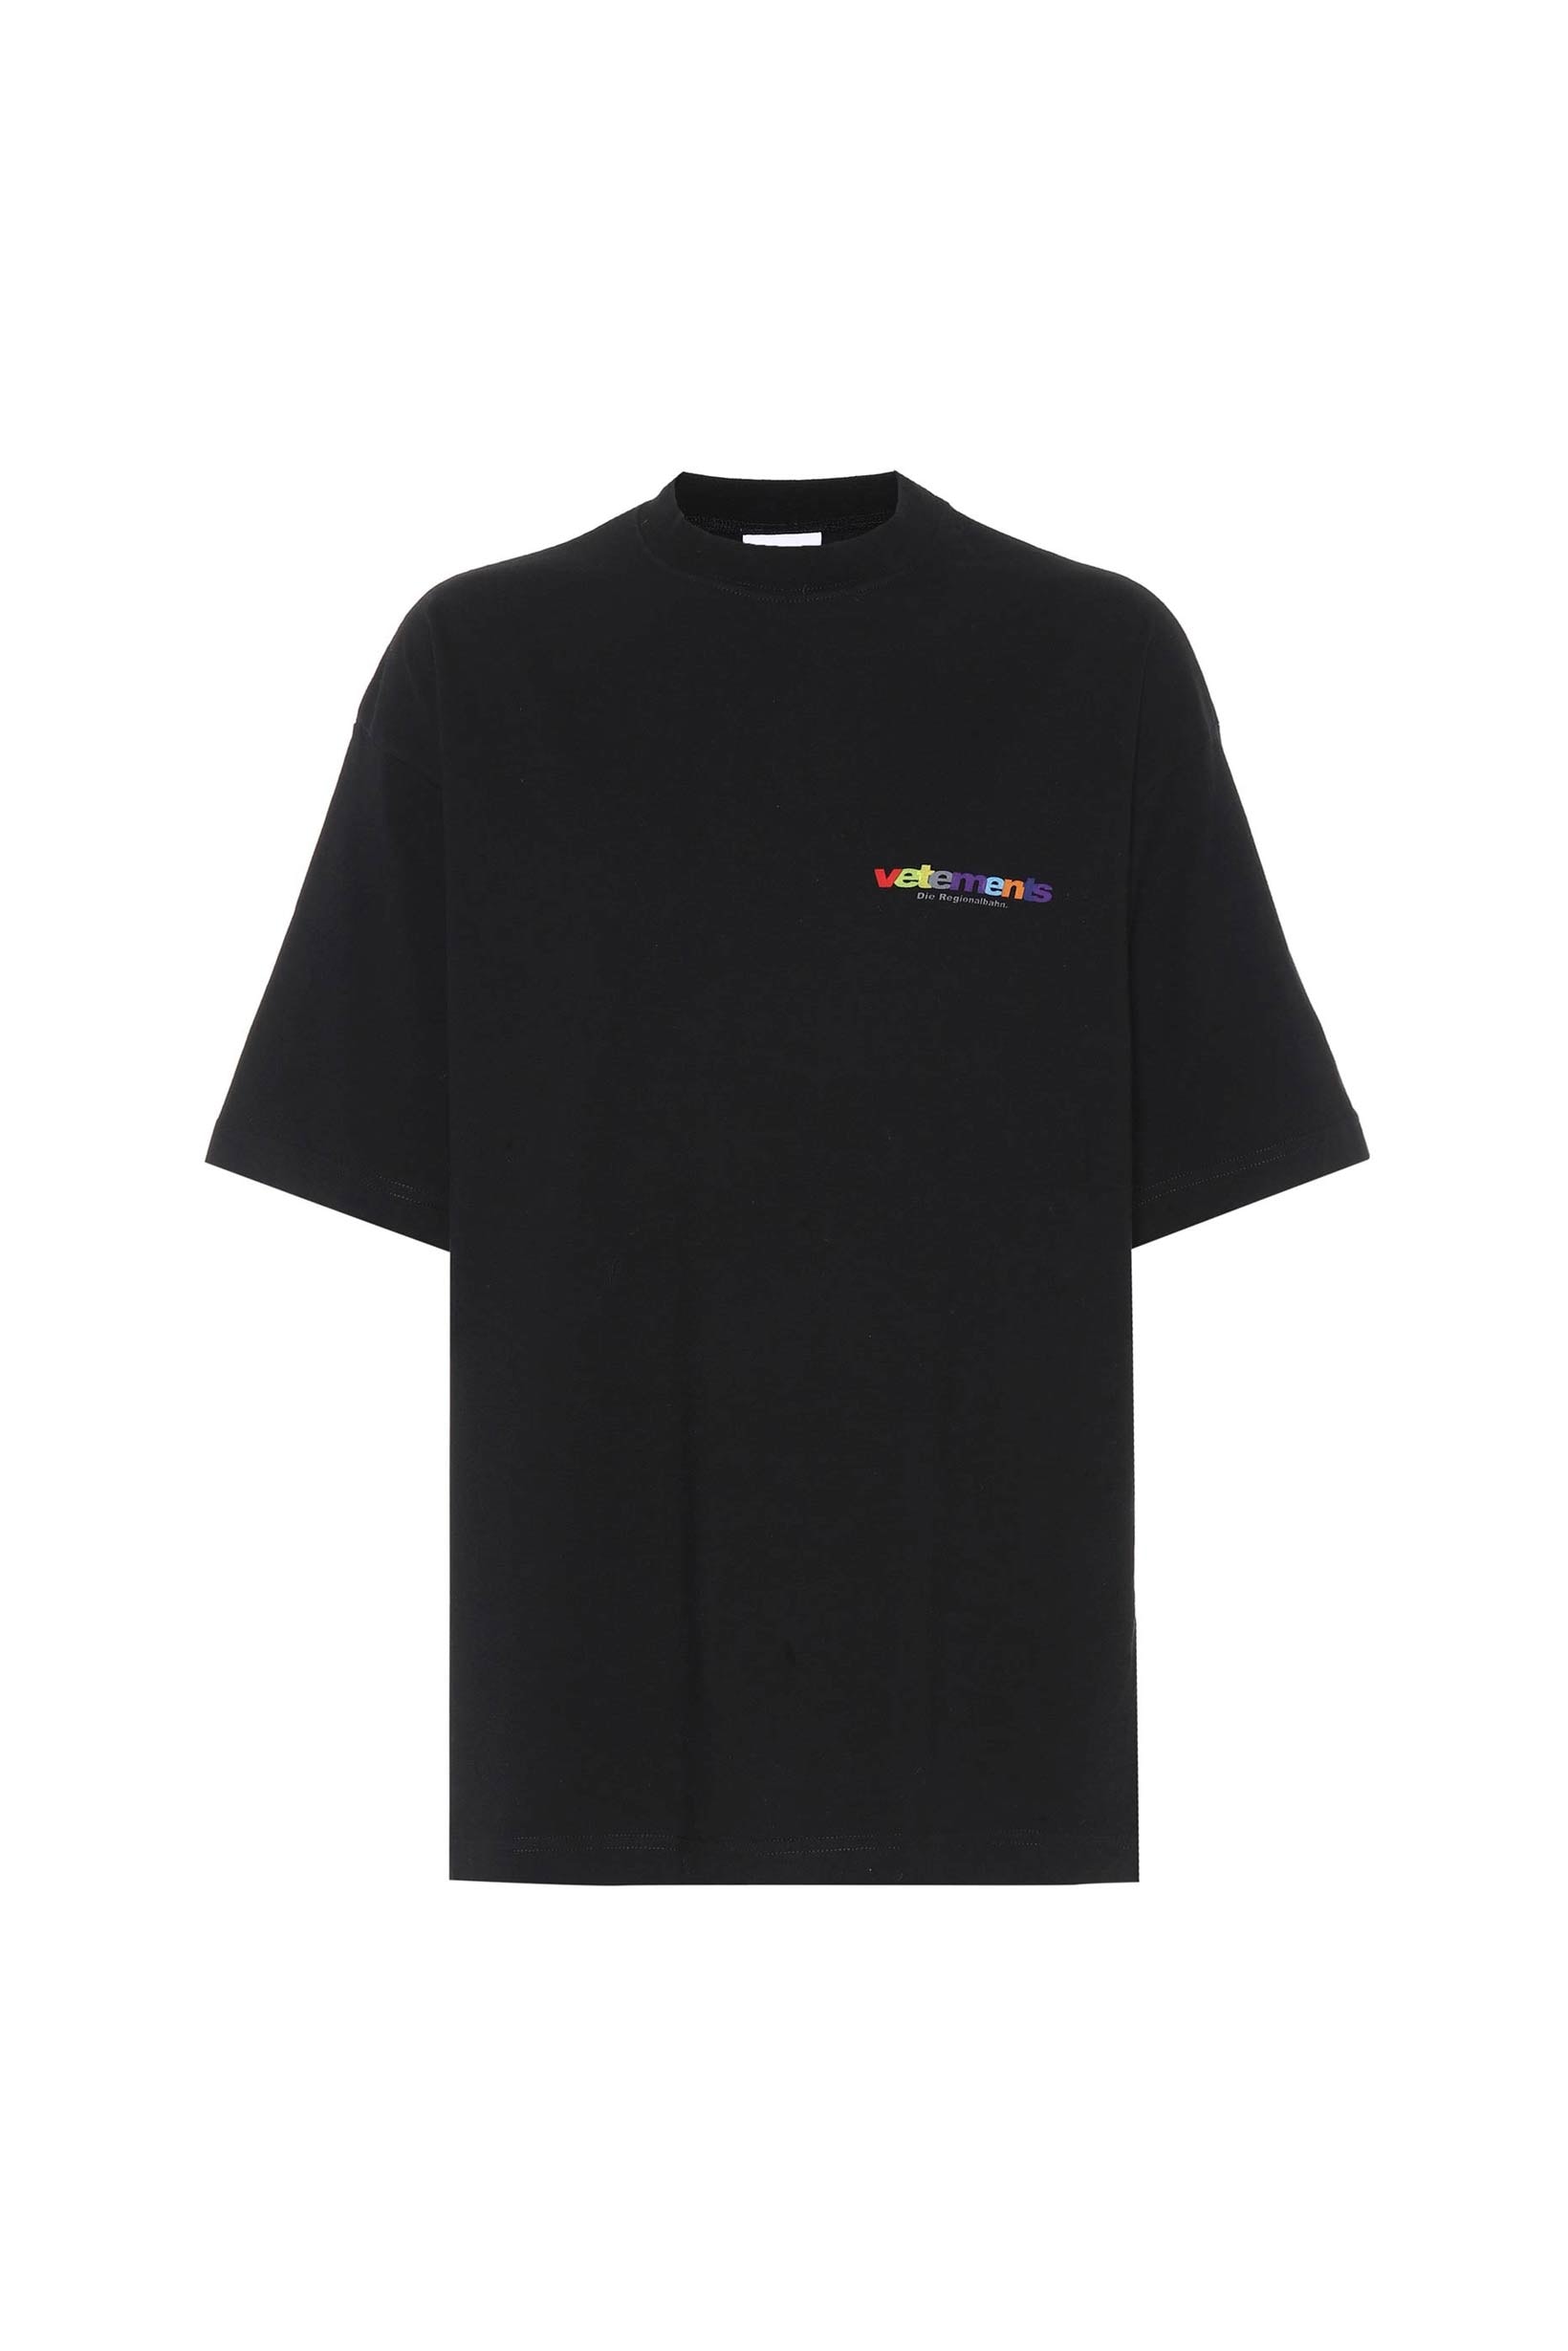 Buy Vetements' Rainbow Logo Hoodie & T-Shirt Now | Hypebae